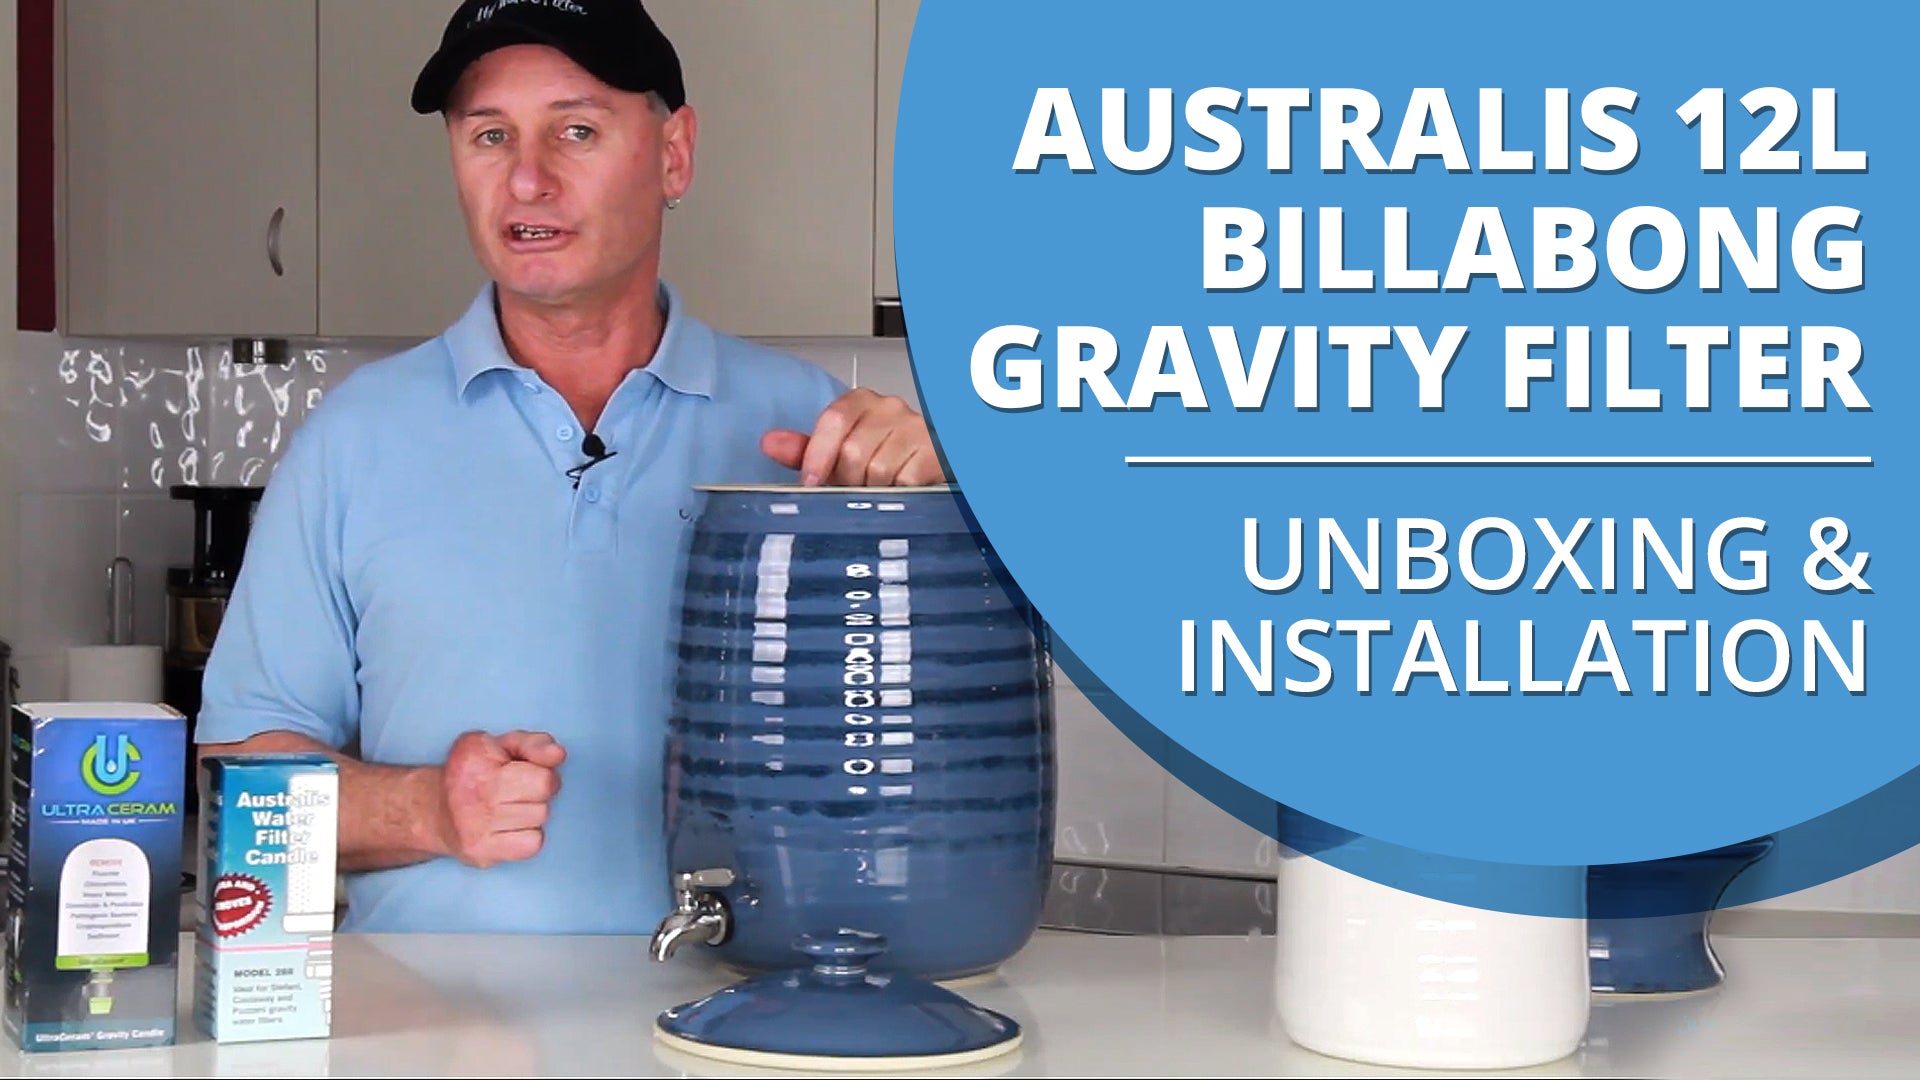 [VIDEO] Australis 12L Billabong Stoneware Water Purifier - Unboxing & Installation Video